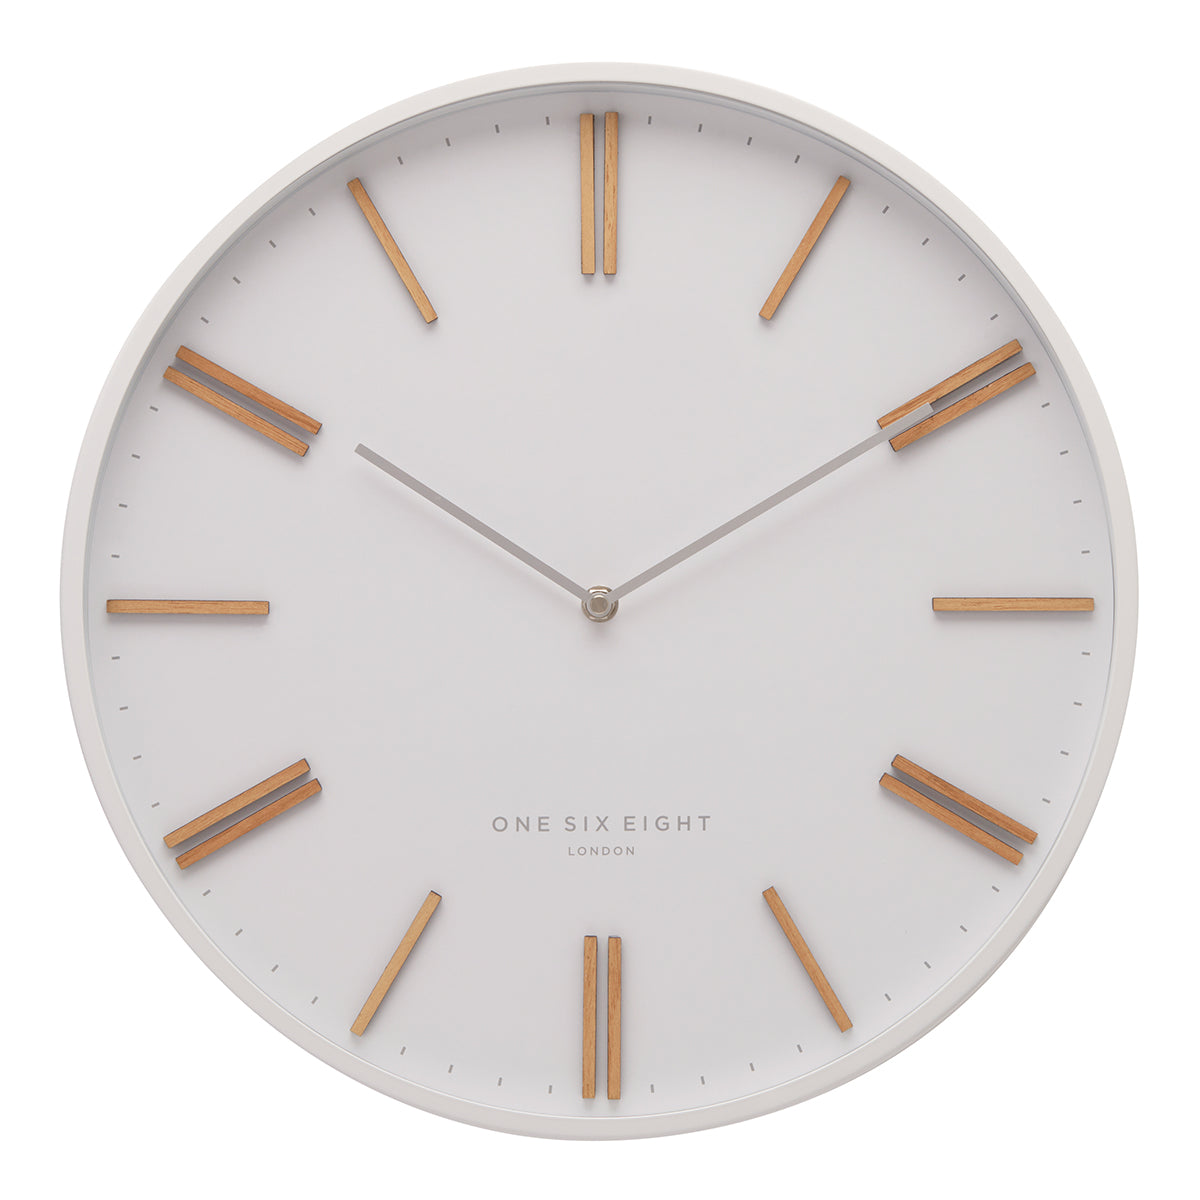 ESME 40cm White Silent Wall Clock (One Six Eight London)